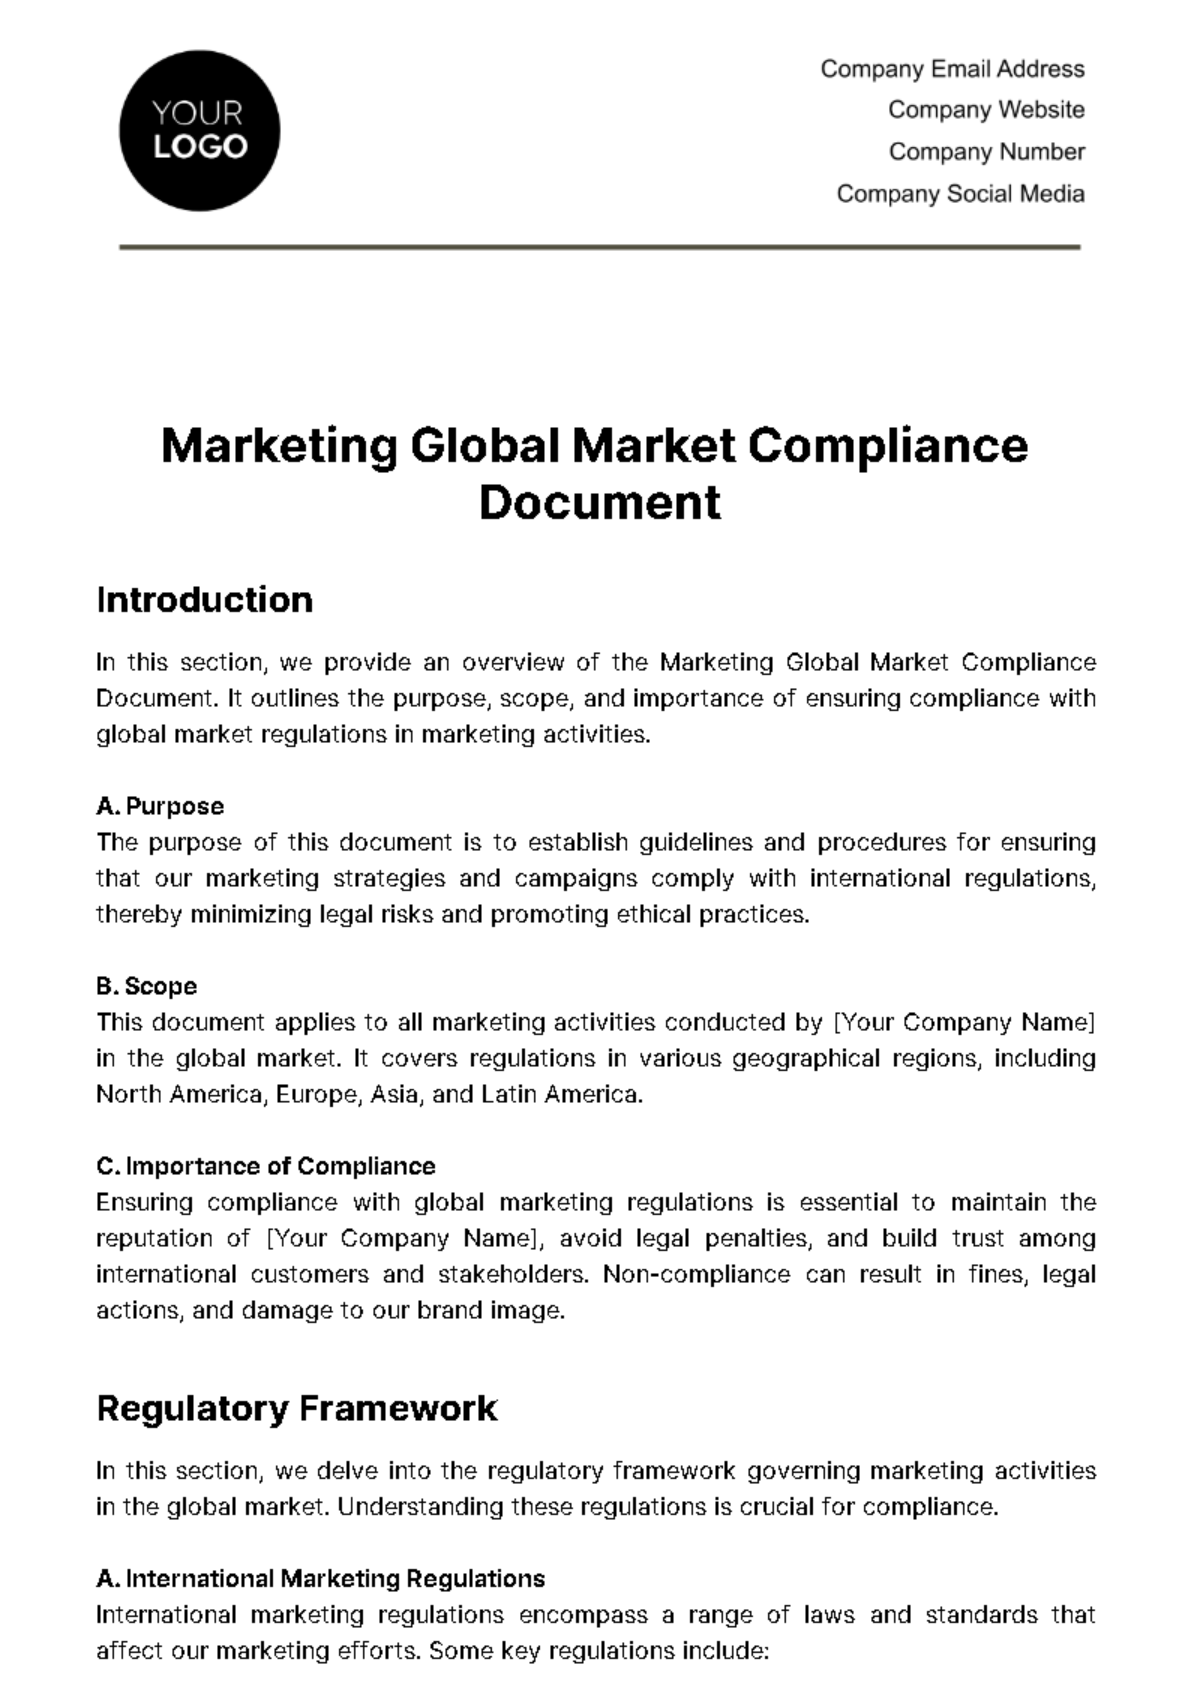 Marketing Global Market Compliance Document Template